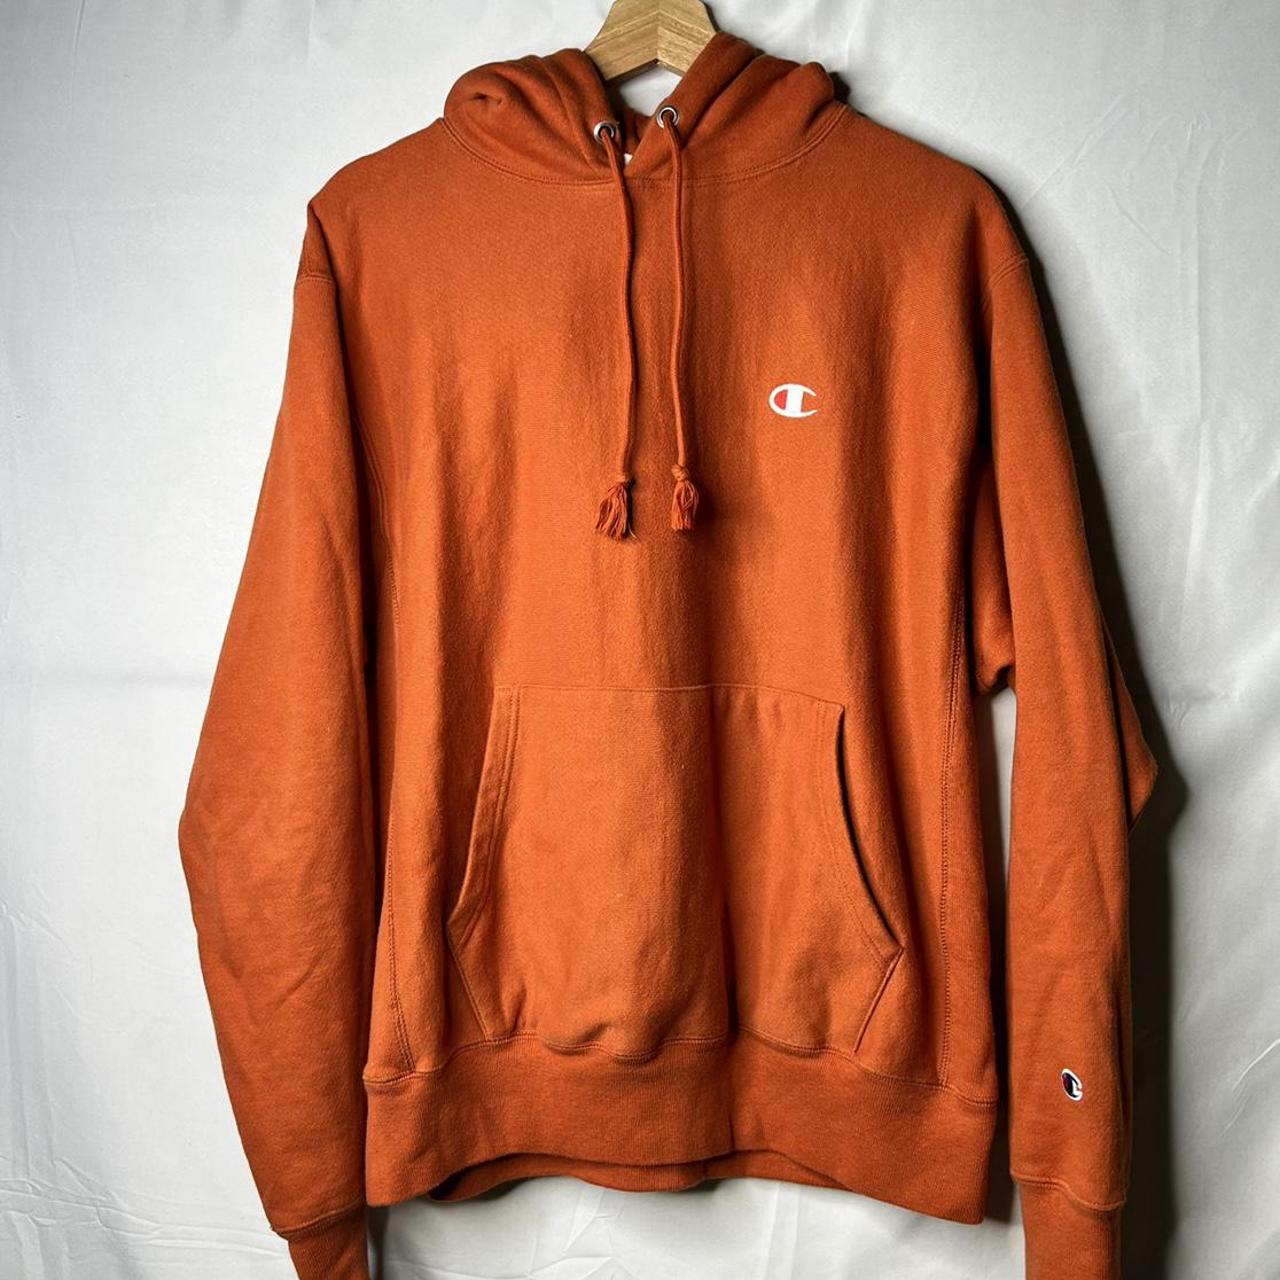 Product Image 1 - Orange Champion Reverse Weave Hoodie

Size